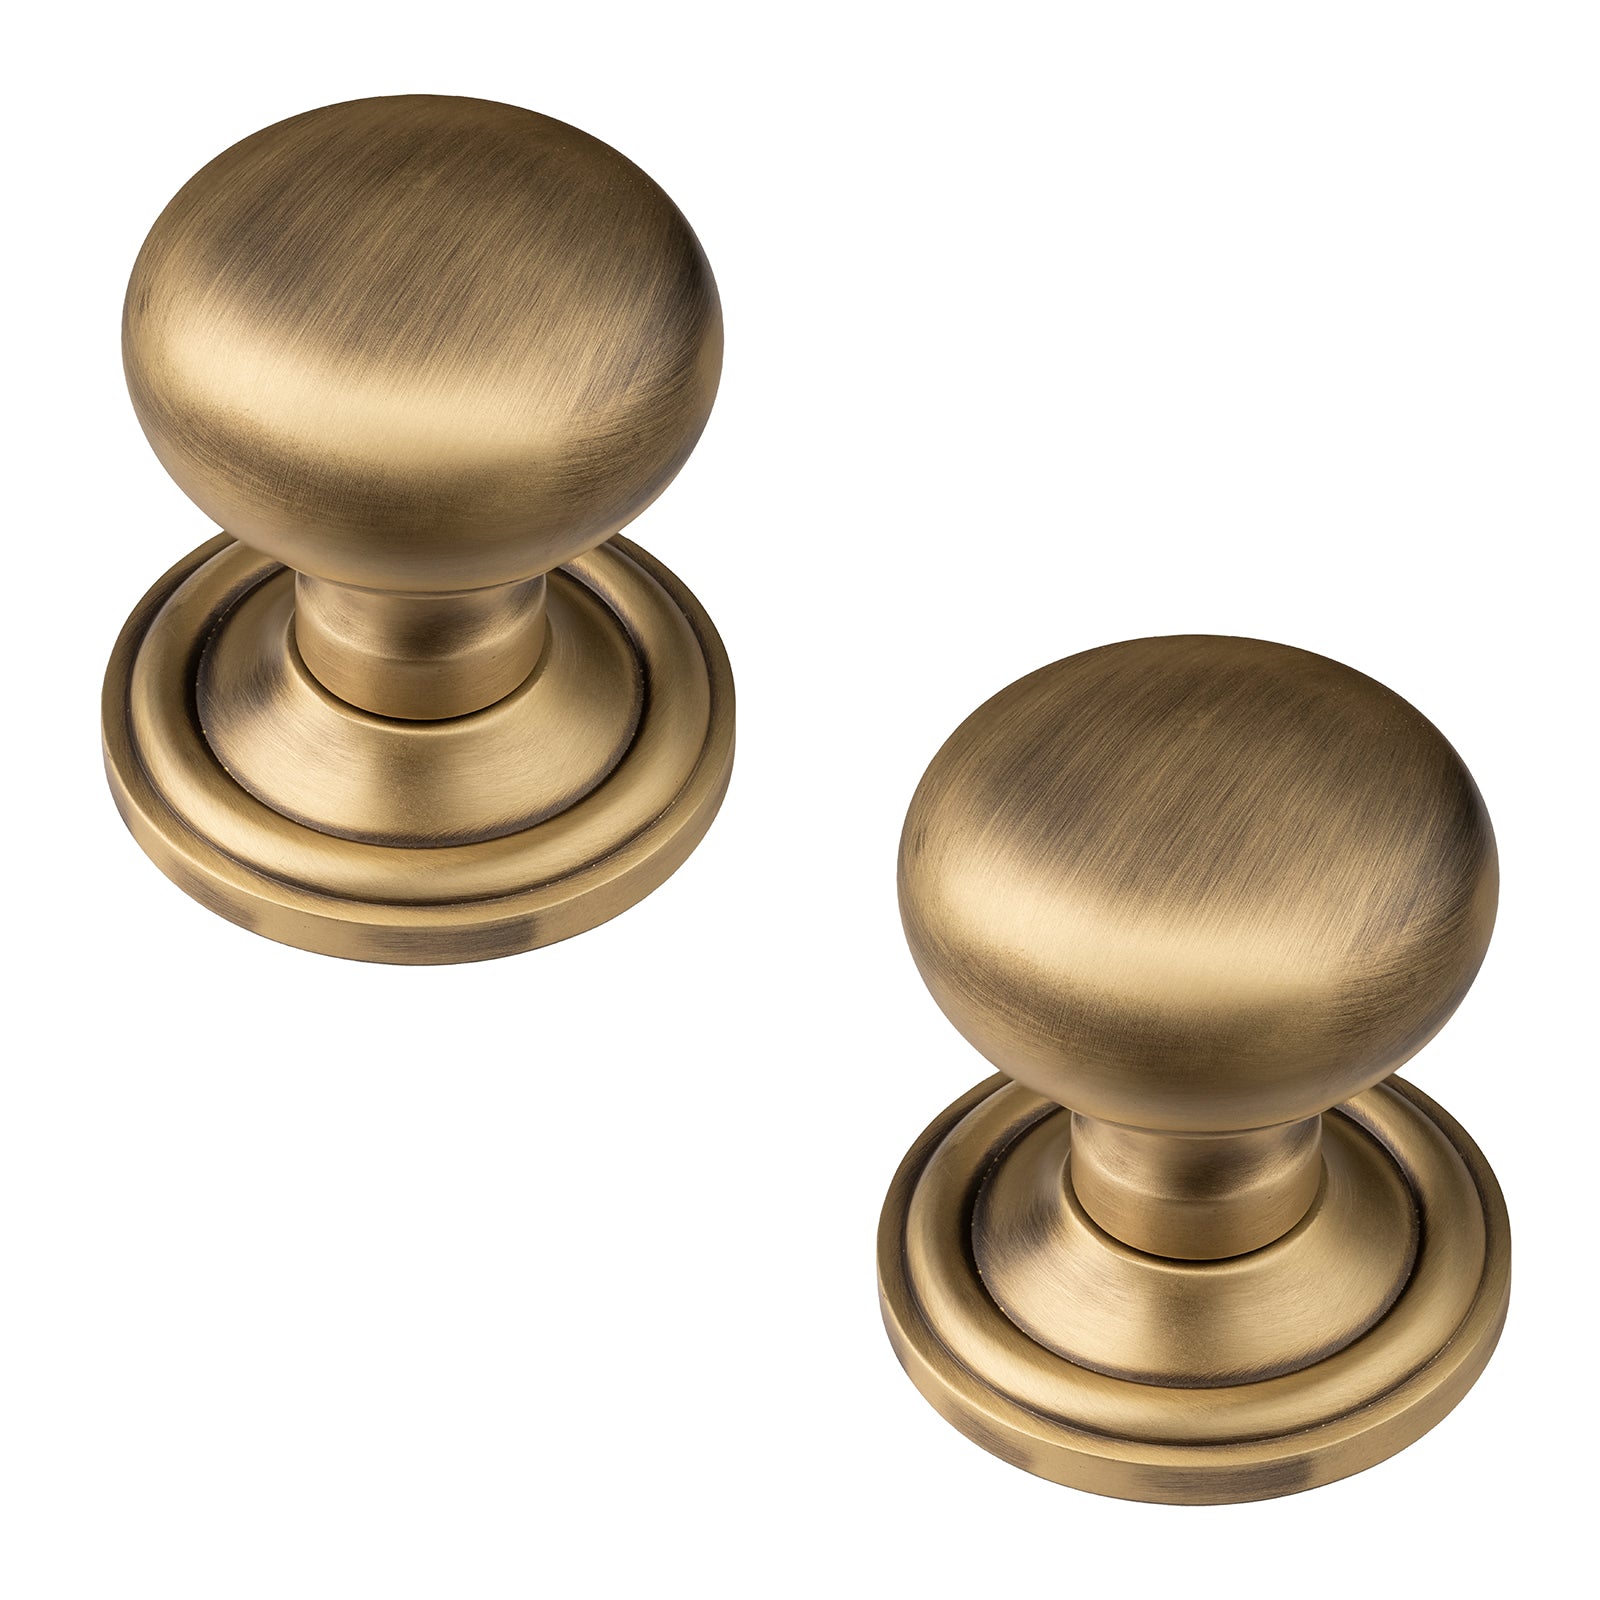 mushroom antique brass door knob SHOW